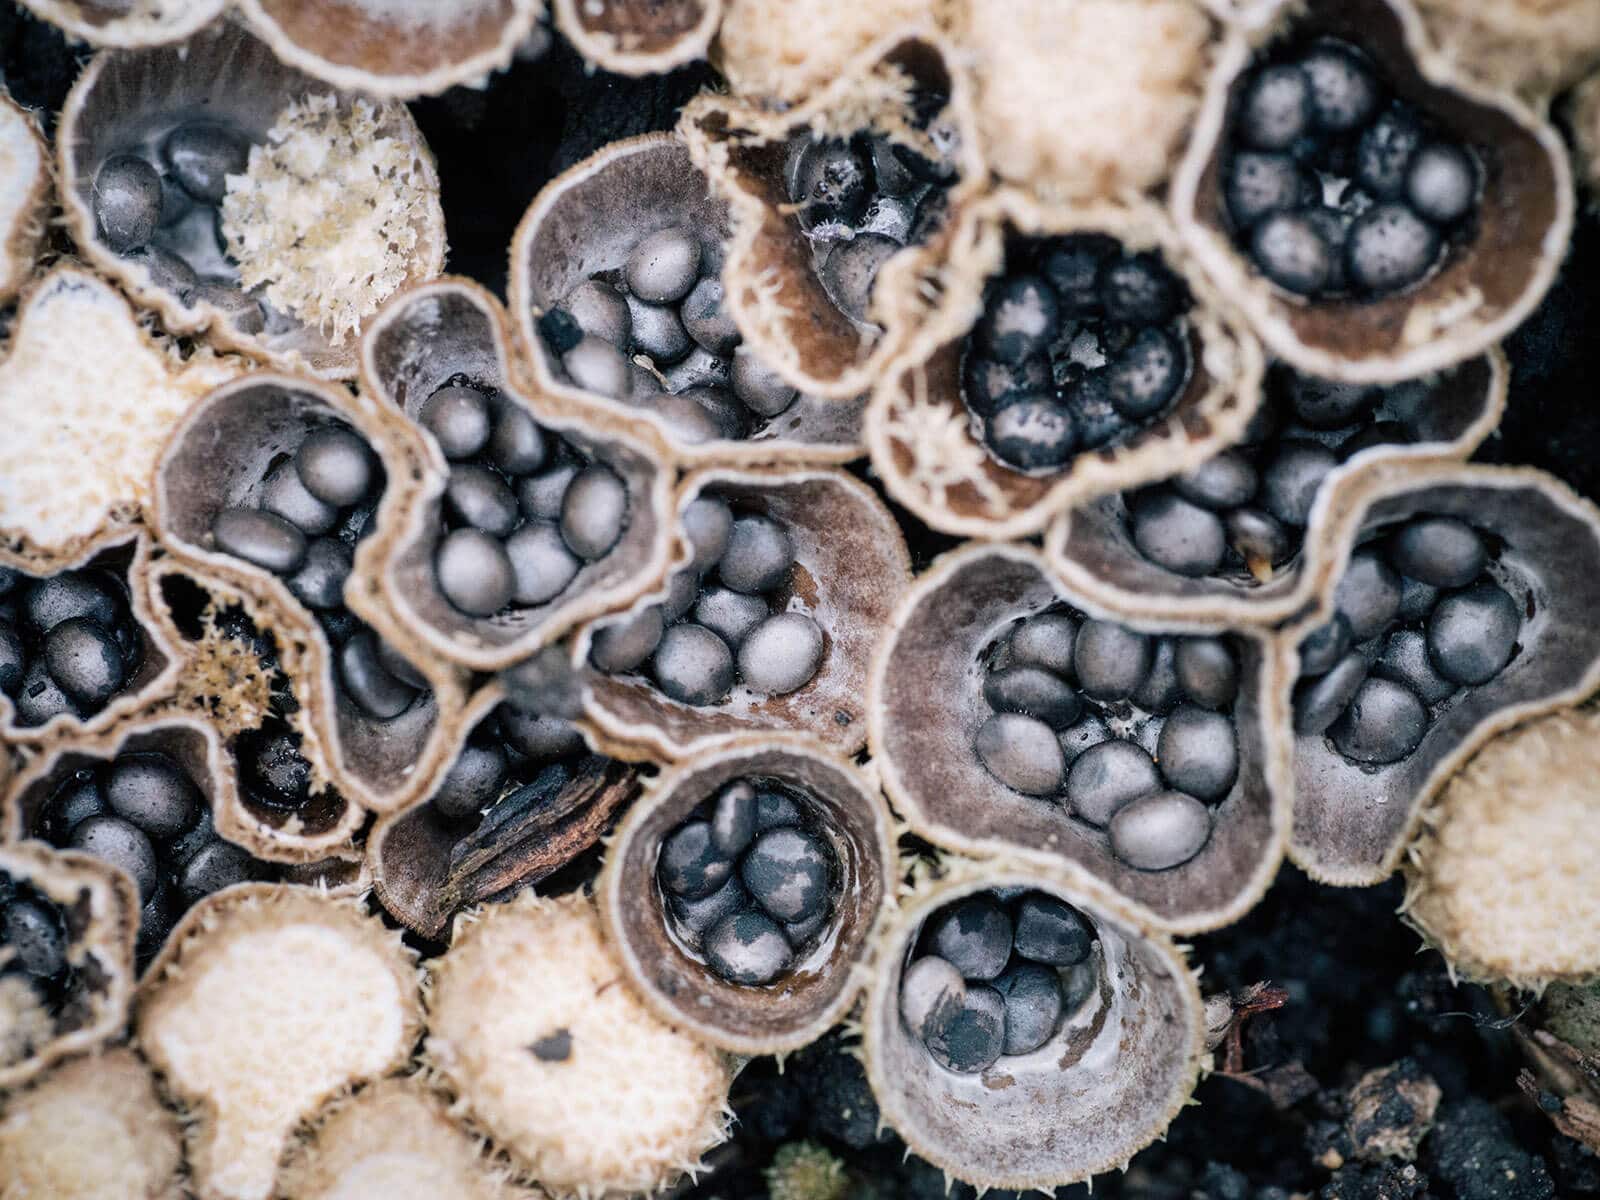 Overhead shot of bird's nest fungi "eggs" inside cups